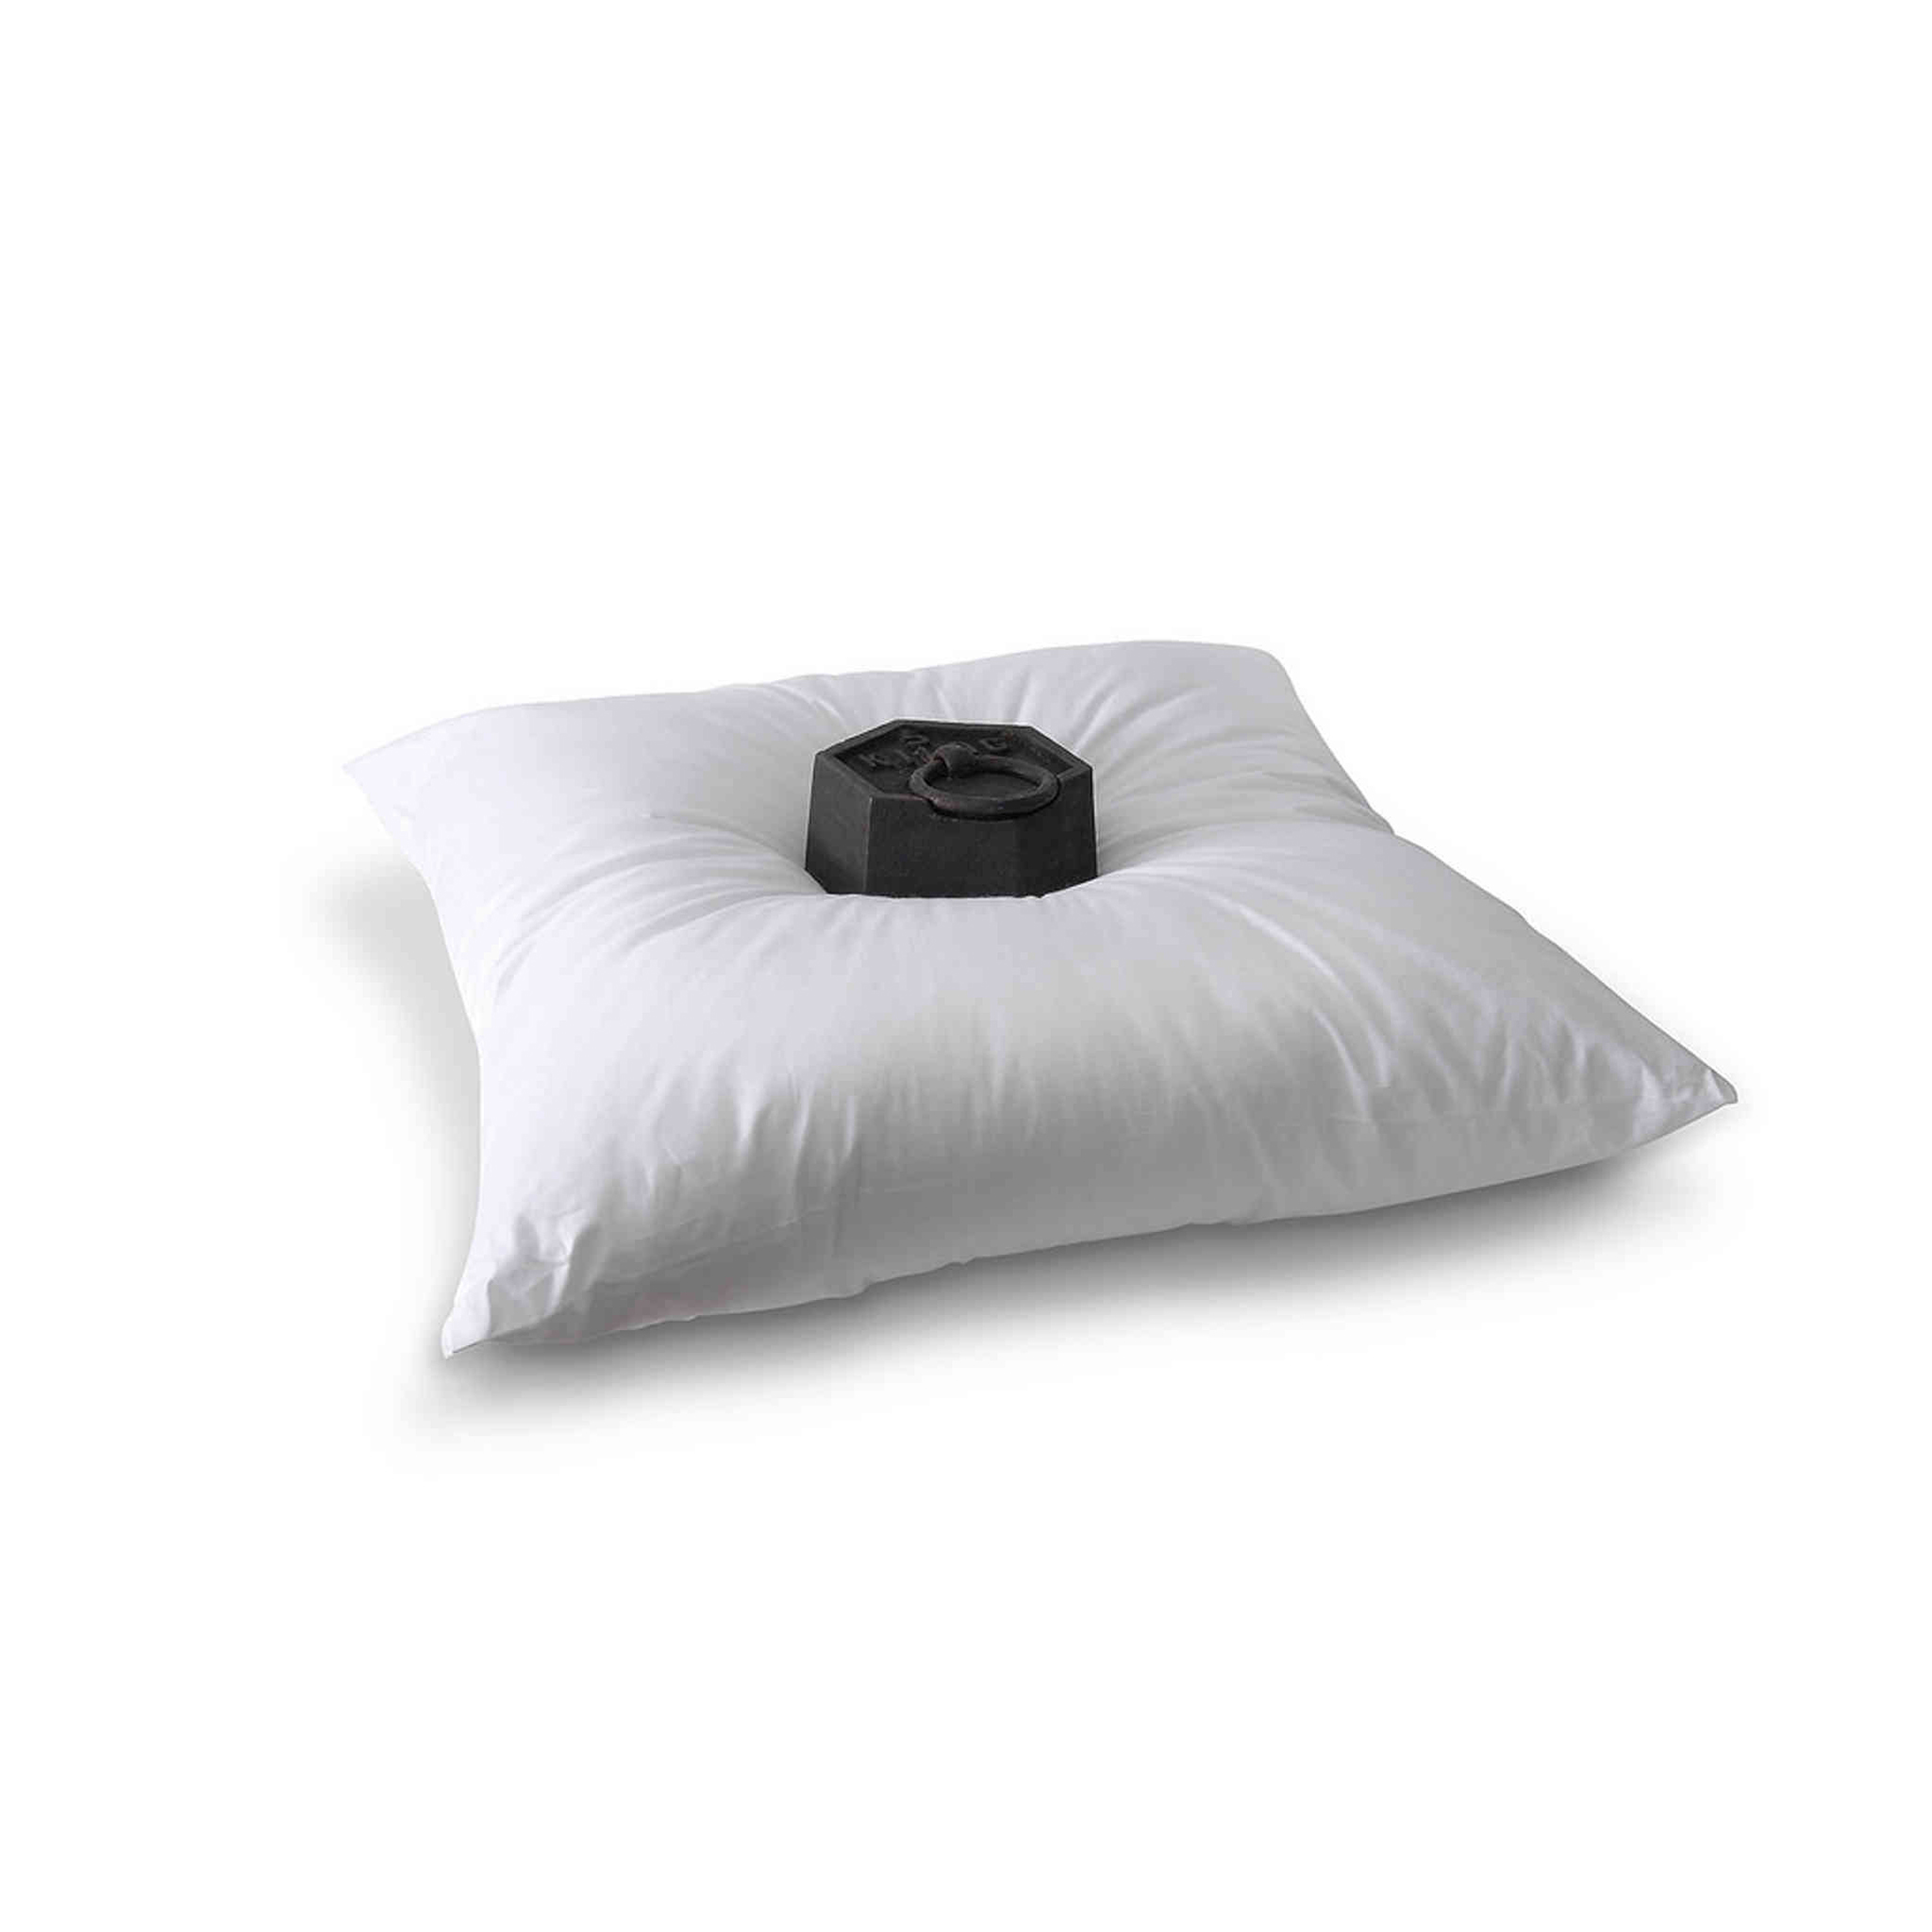 lematelas.com - L'oreiller Confort Original de la marque